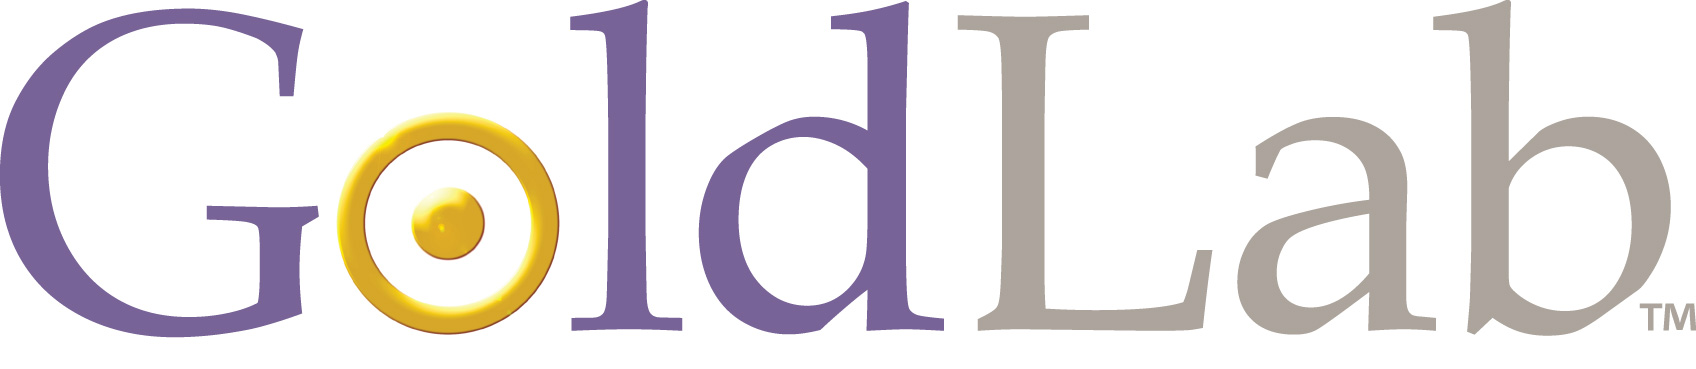 GoldLab logo.jpg